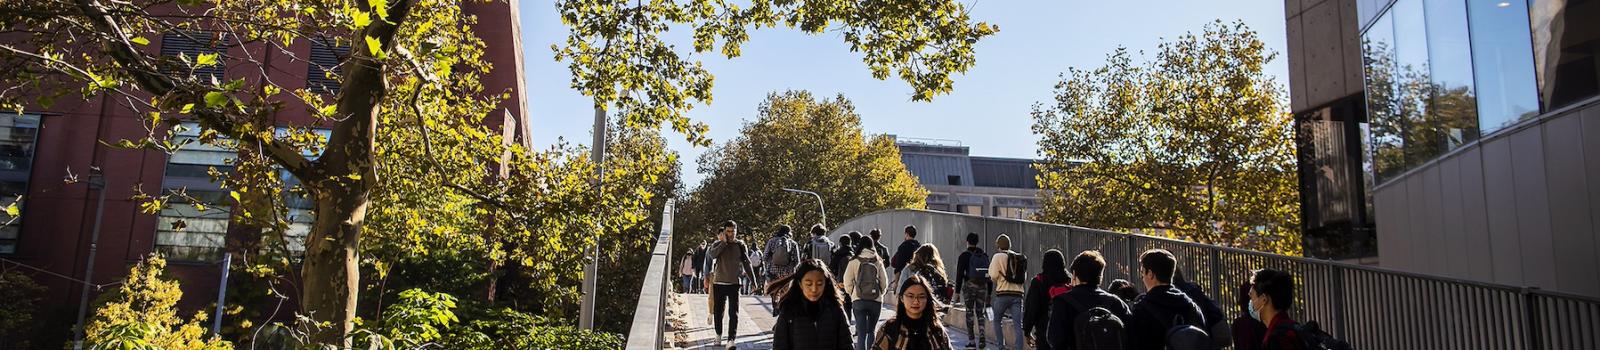 Students walking over bridge on campus